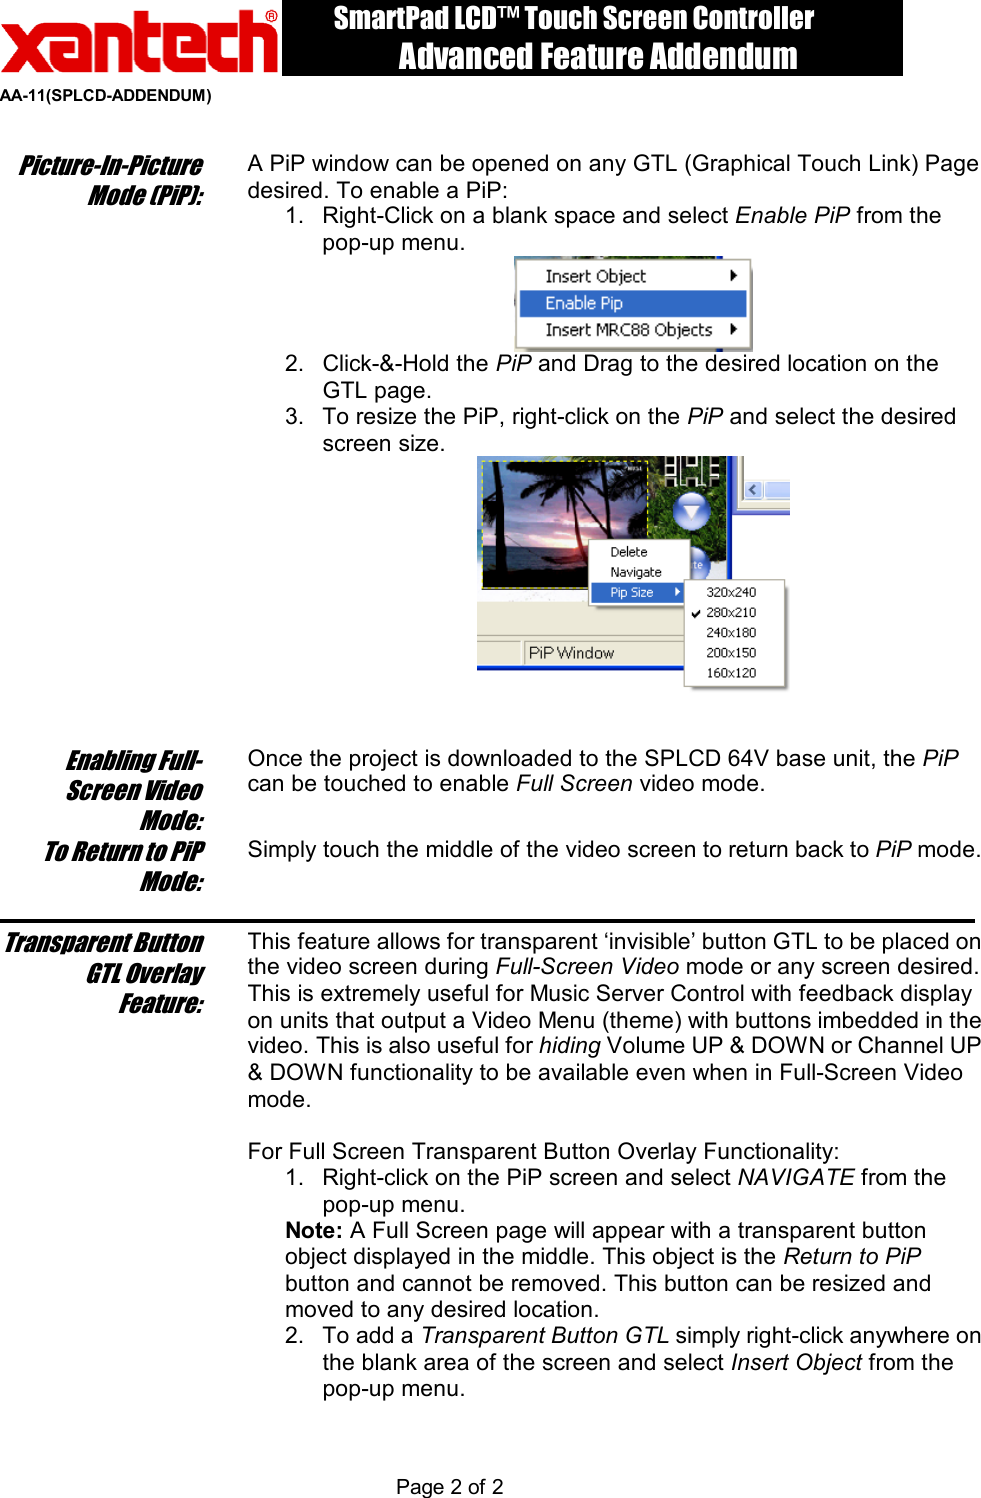 Page 2 of 10 - 18 A Aa11-Splcd-Adv-Prgm-Addendum-R2 - SPLCD-ADV-PRGM-ADDENDUM-R2 User Manual